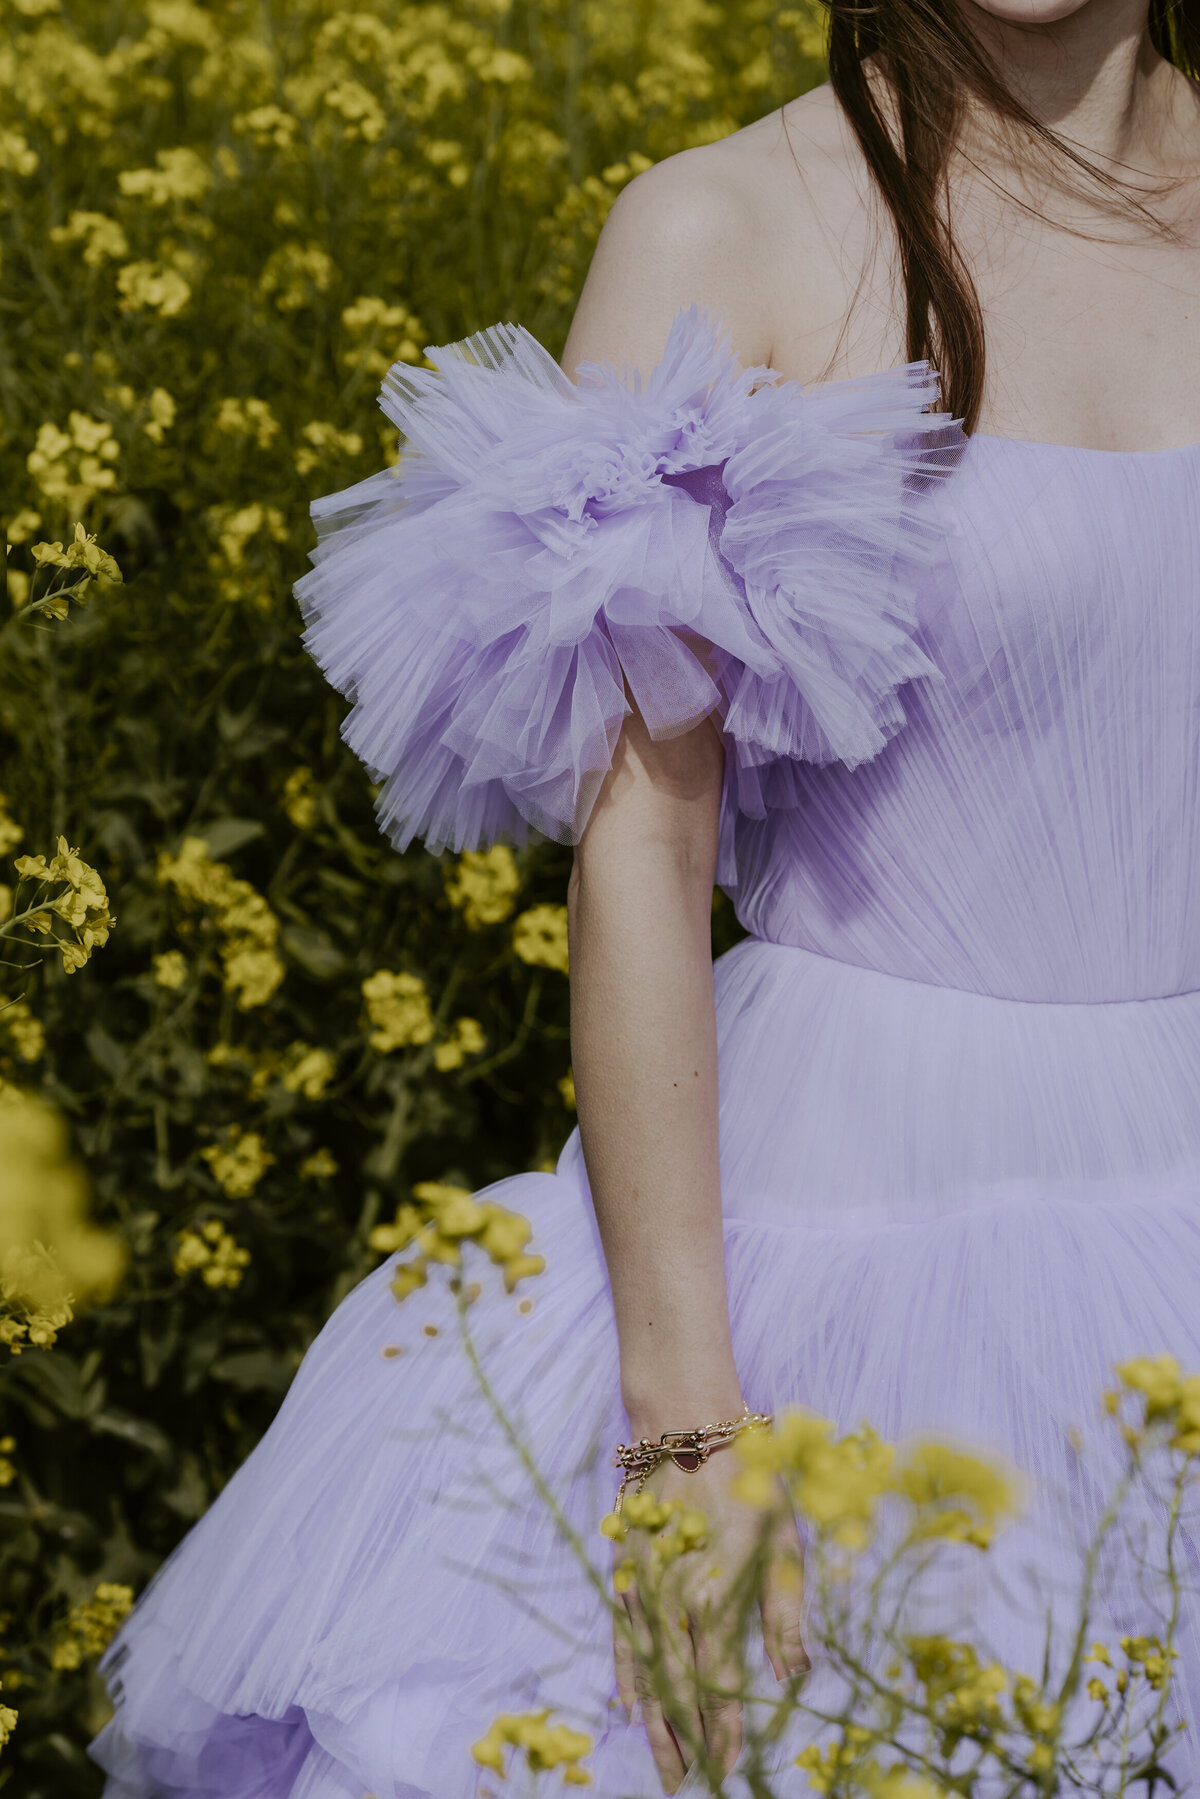 the purple raffled dress of the bride